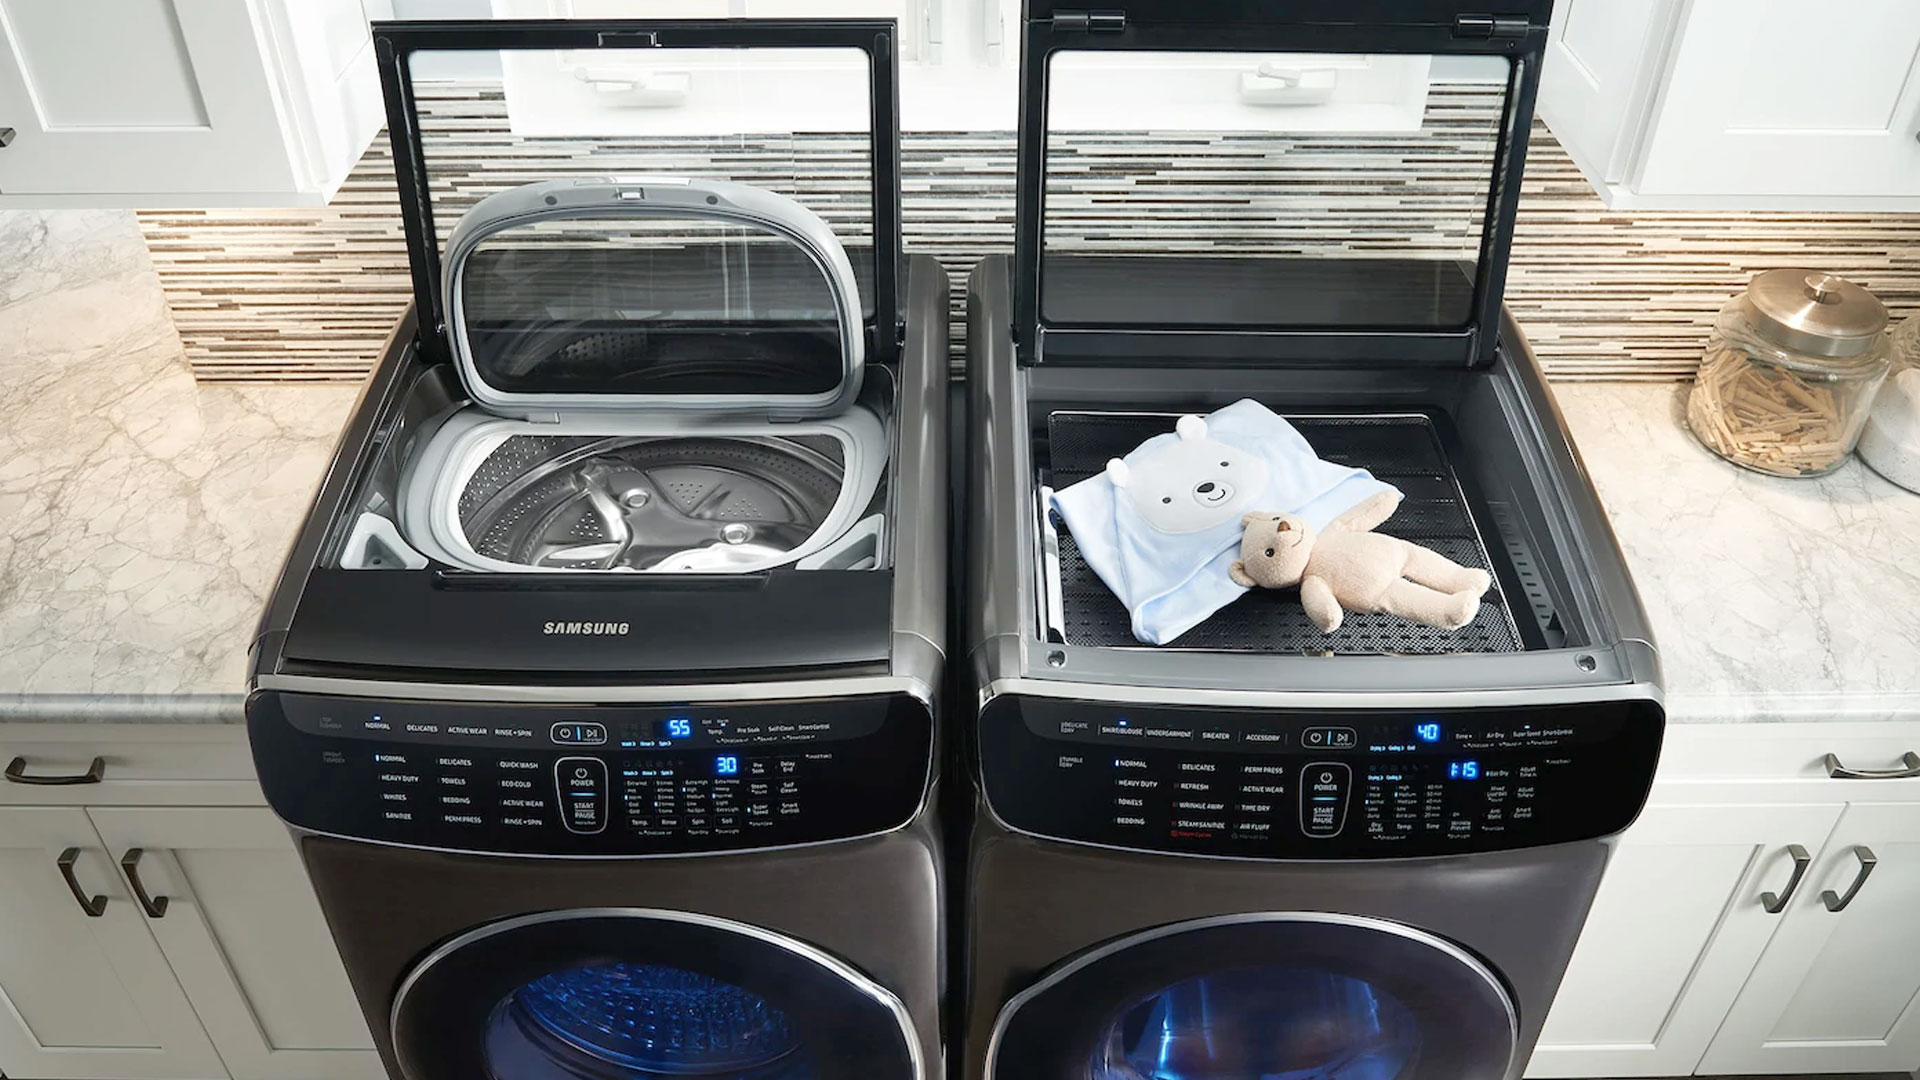 Samsung Dryer Repair | Samsung Appliance Repairs